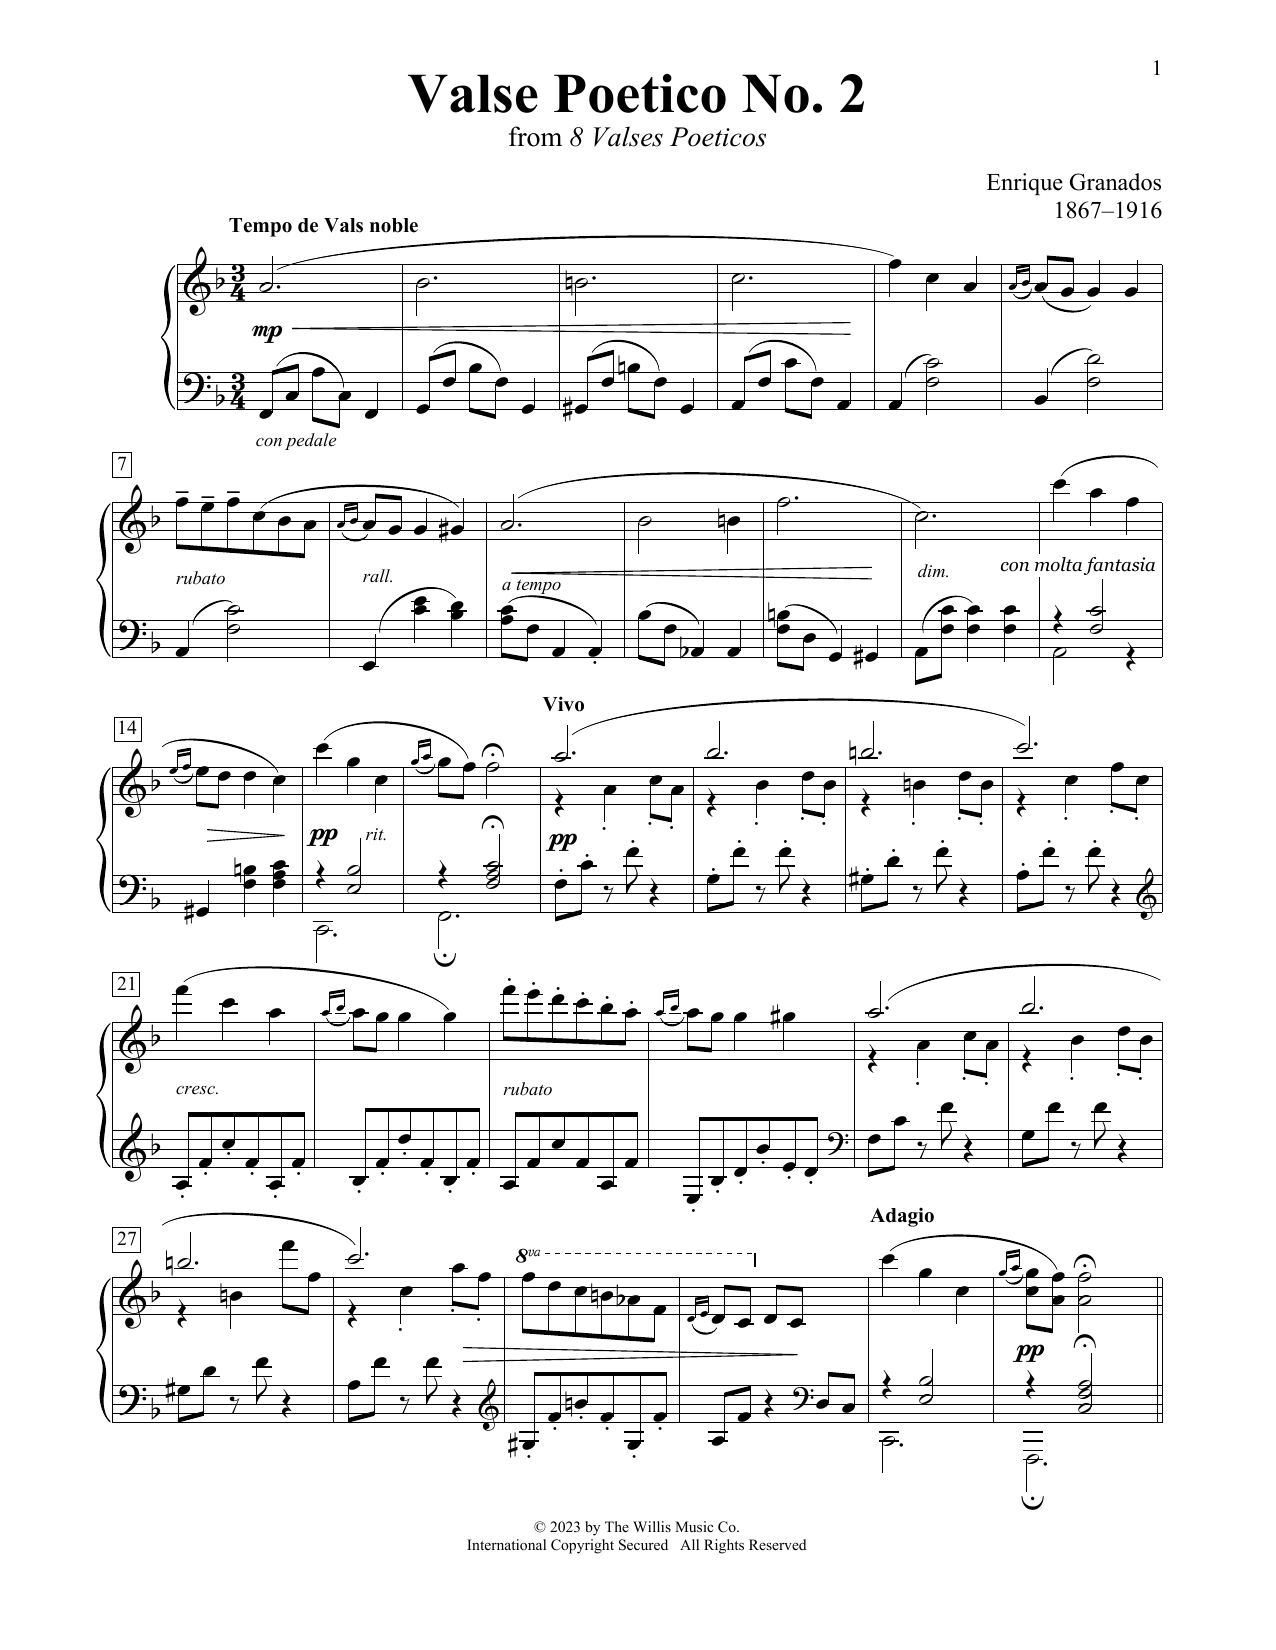 Enrique Granados Valse Poetico No. 2 sheet music notes and chords arranged for Educational Piano